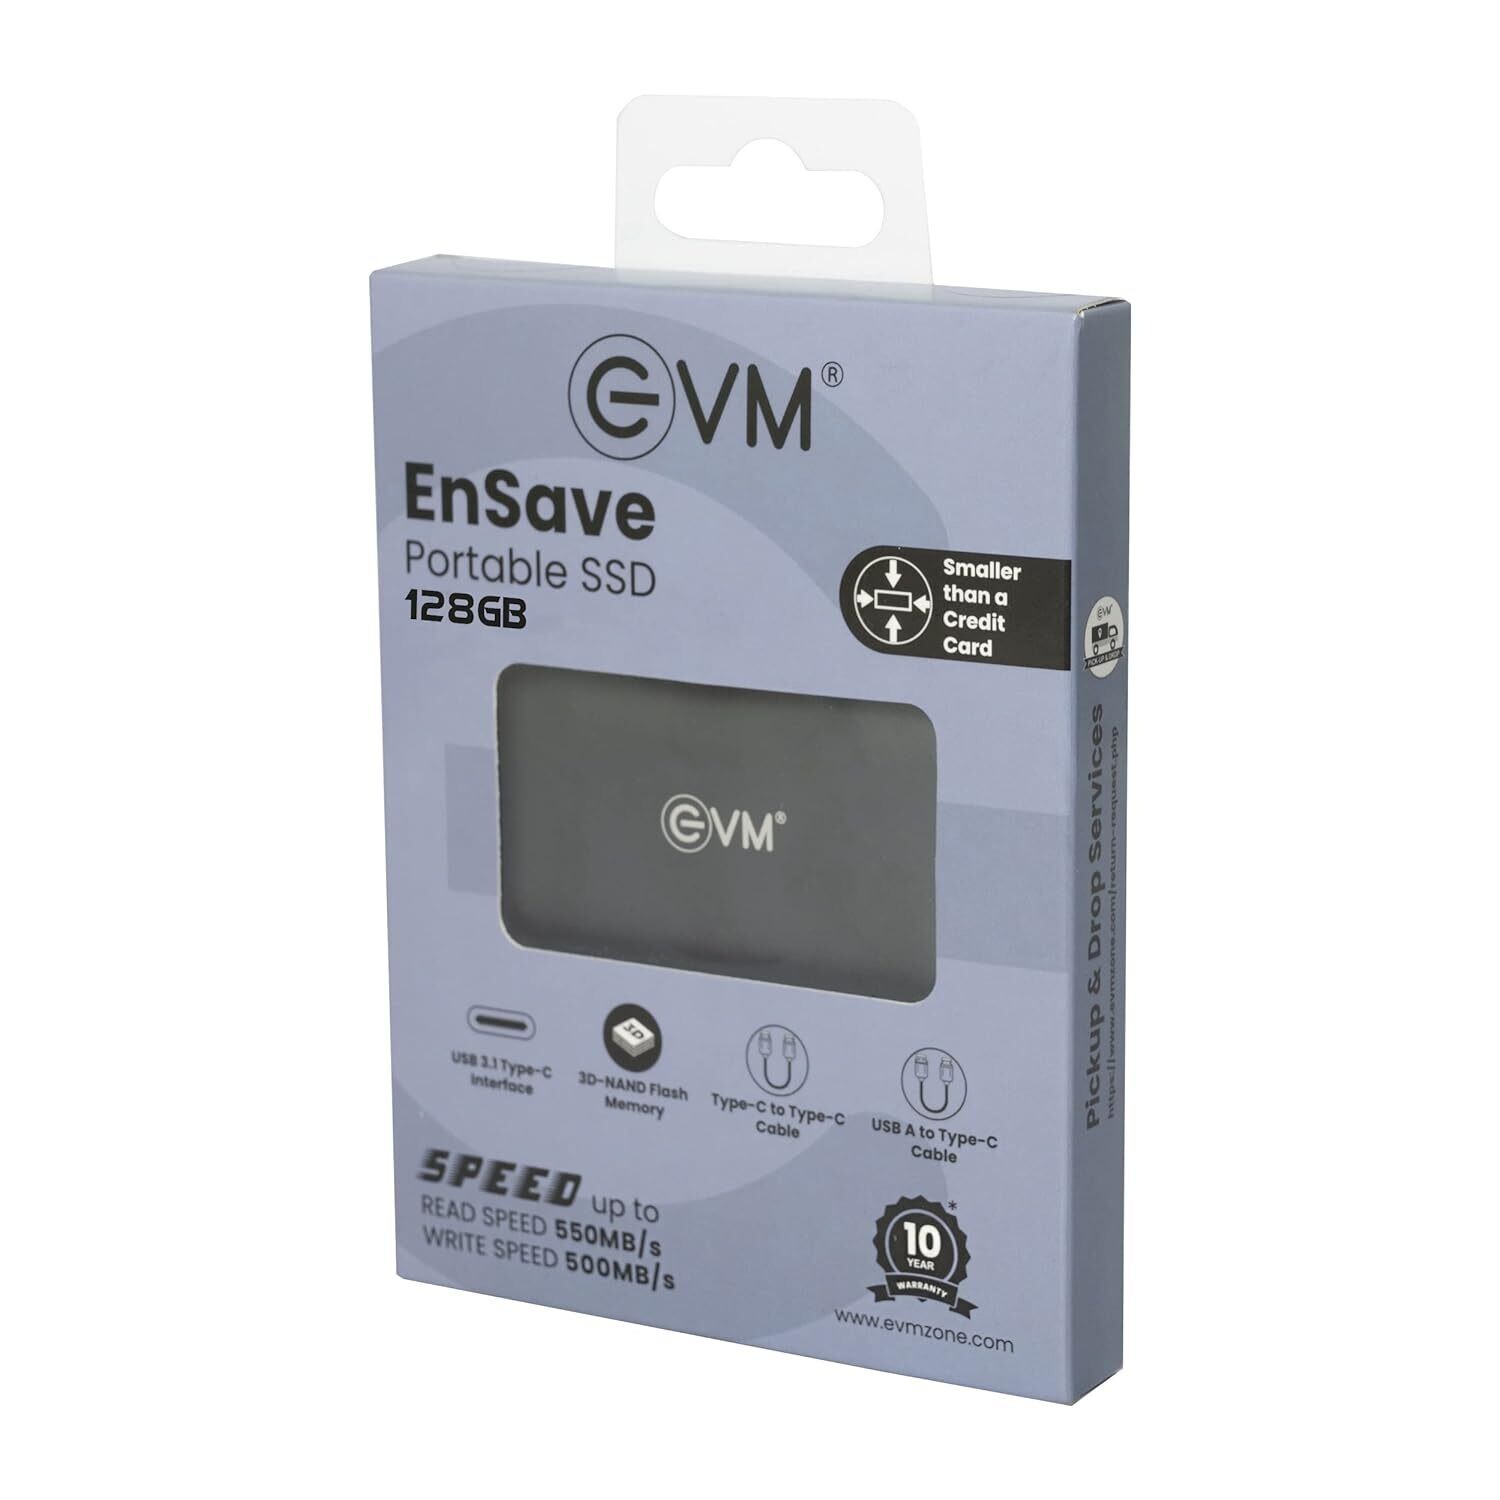 EVM EnSave 128GB Smallest External SSD with USB 3.1 Gen 2 Type C